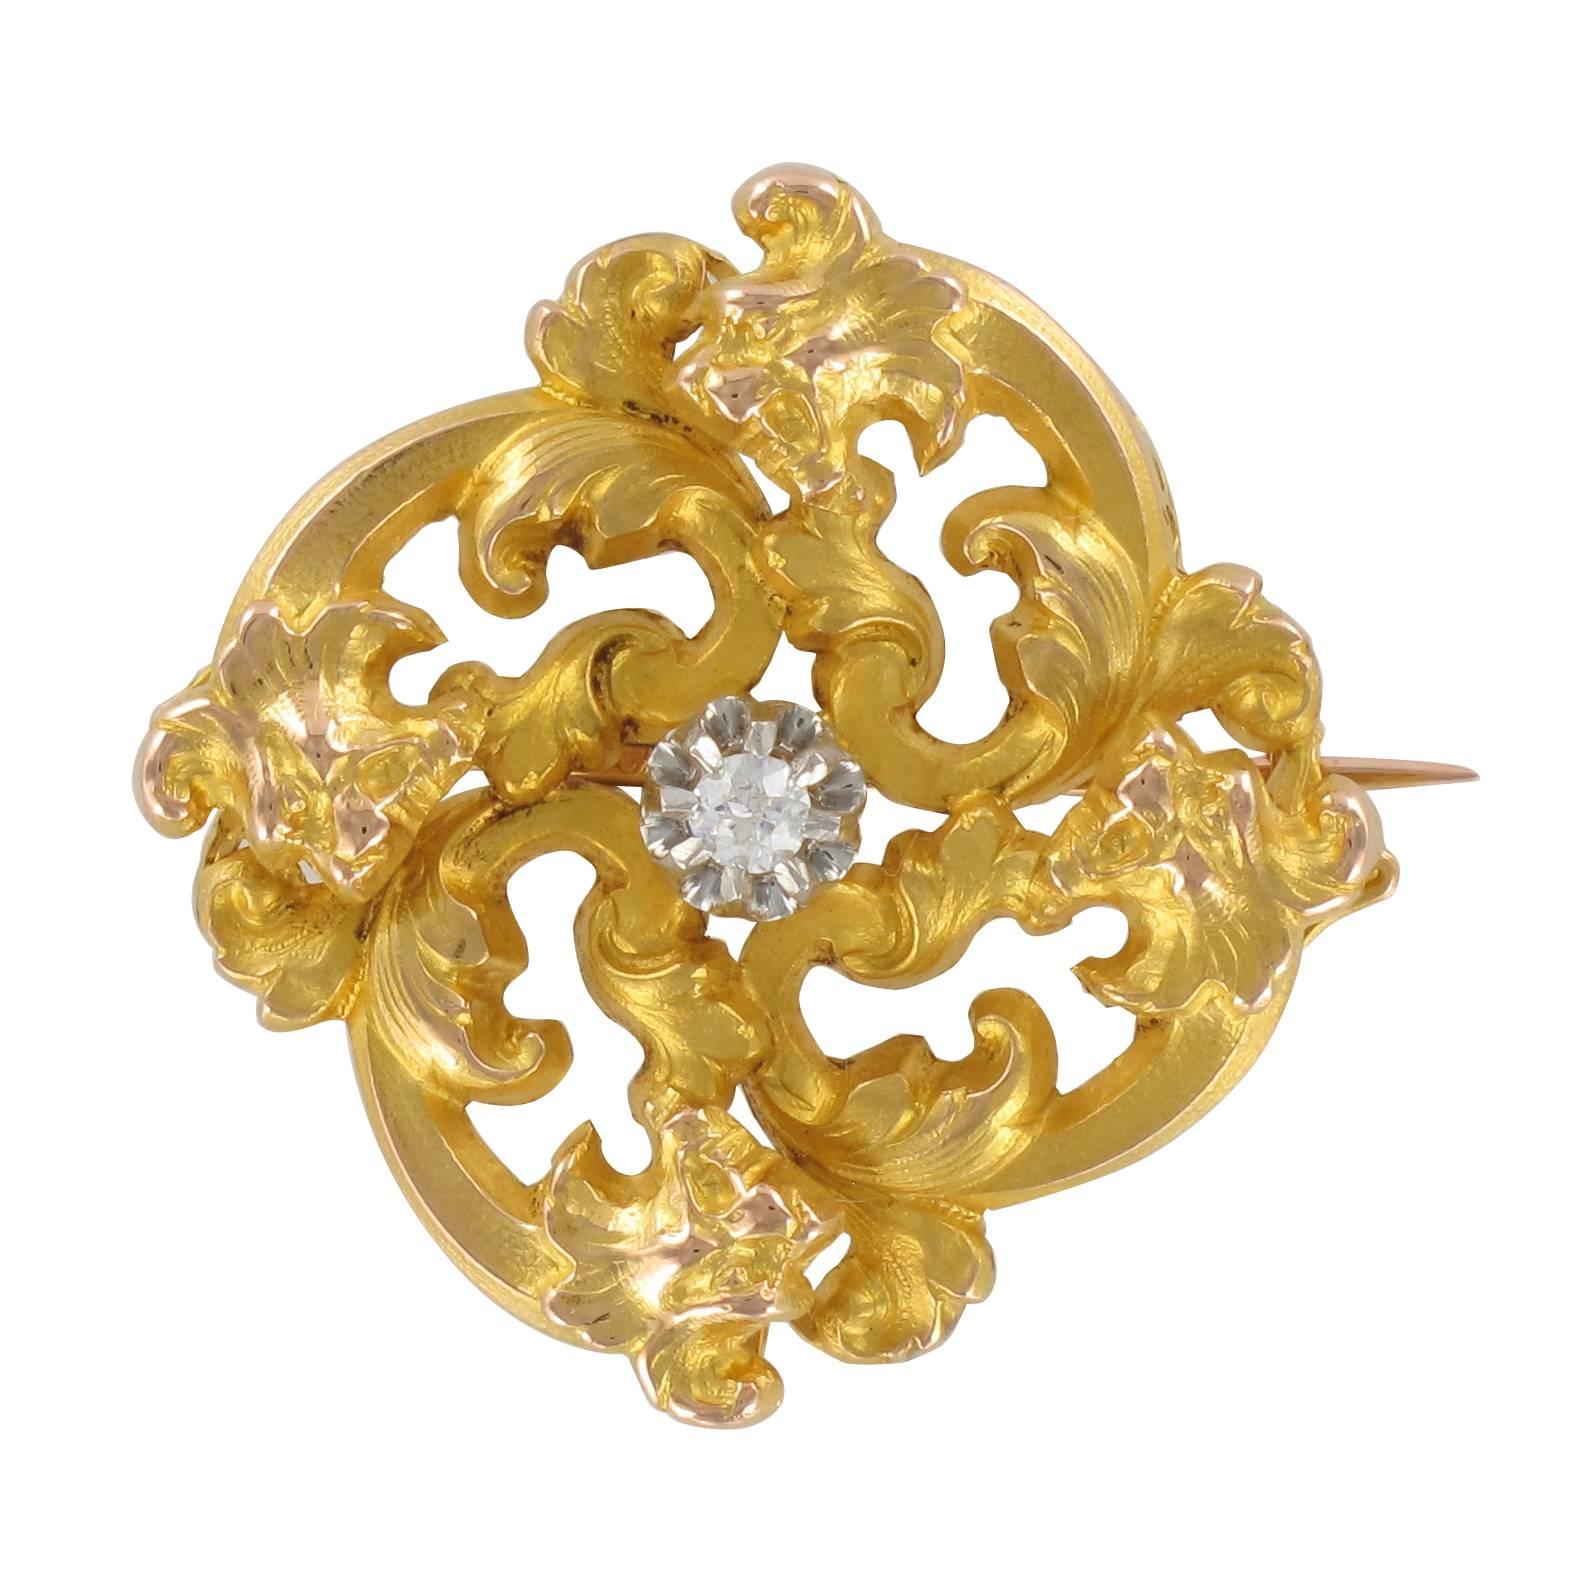 Wiese Spirit French Art Nouveau Yellow Gold Diamond Brooch